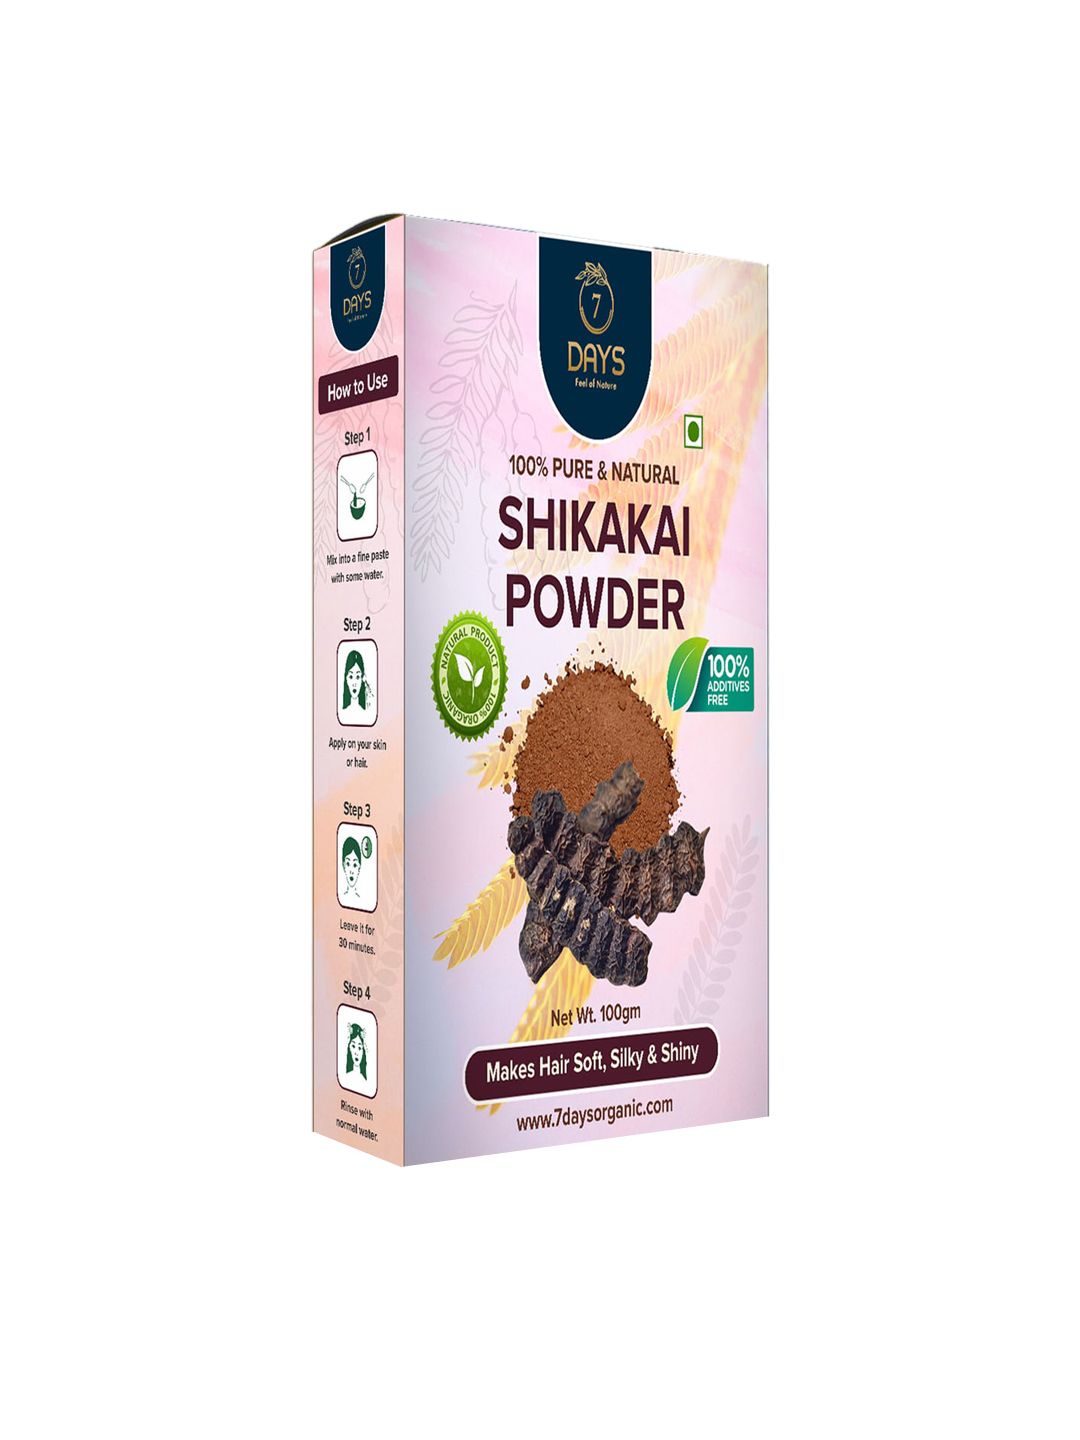 7 DAYS 100% Natural & Pure Shikakai Powder for Soft & Silky Hair - 100 g Price in India